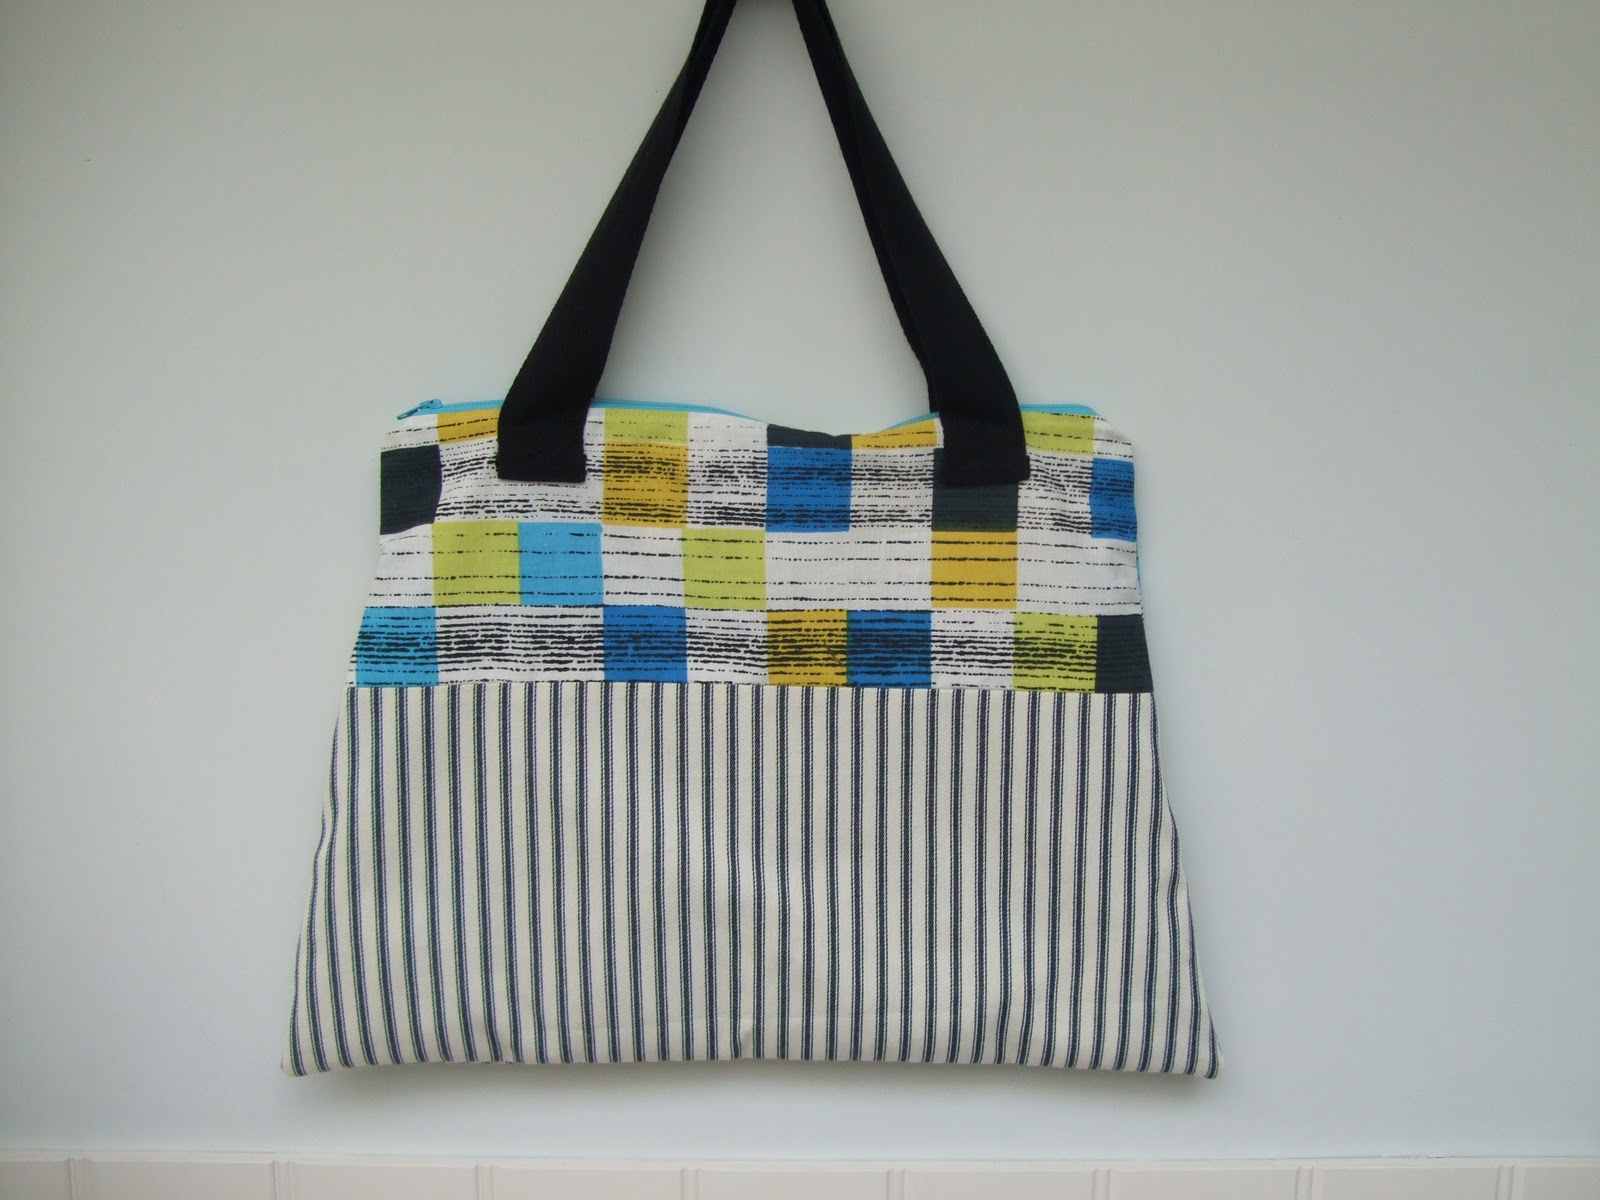 simply h designs: Peg bags and handbags